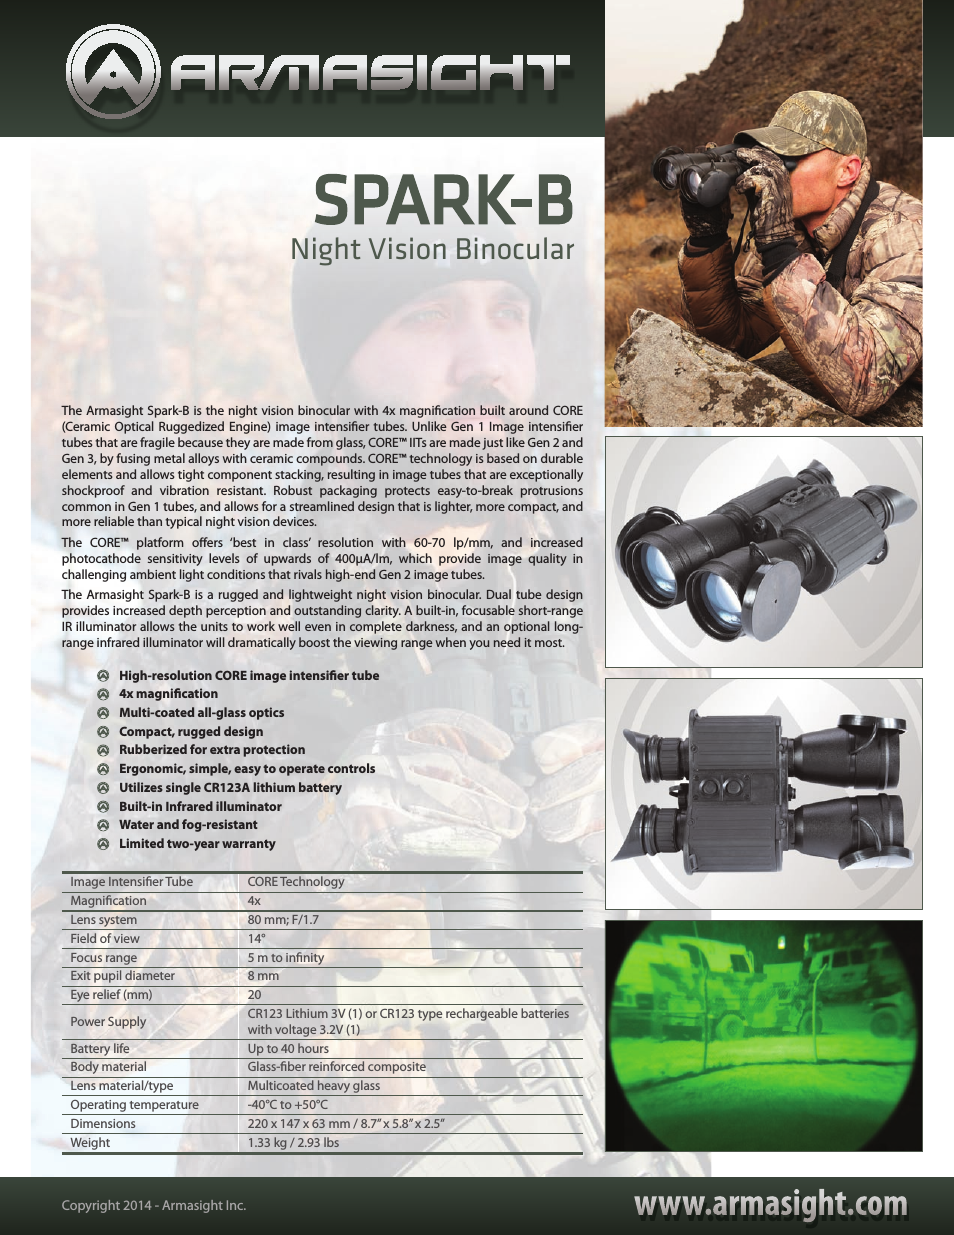 NSBSPARKB4CCIC1 Spark-B CORE 4x Night Vision Binocular